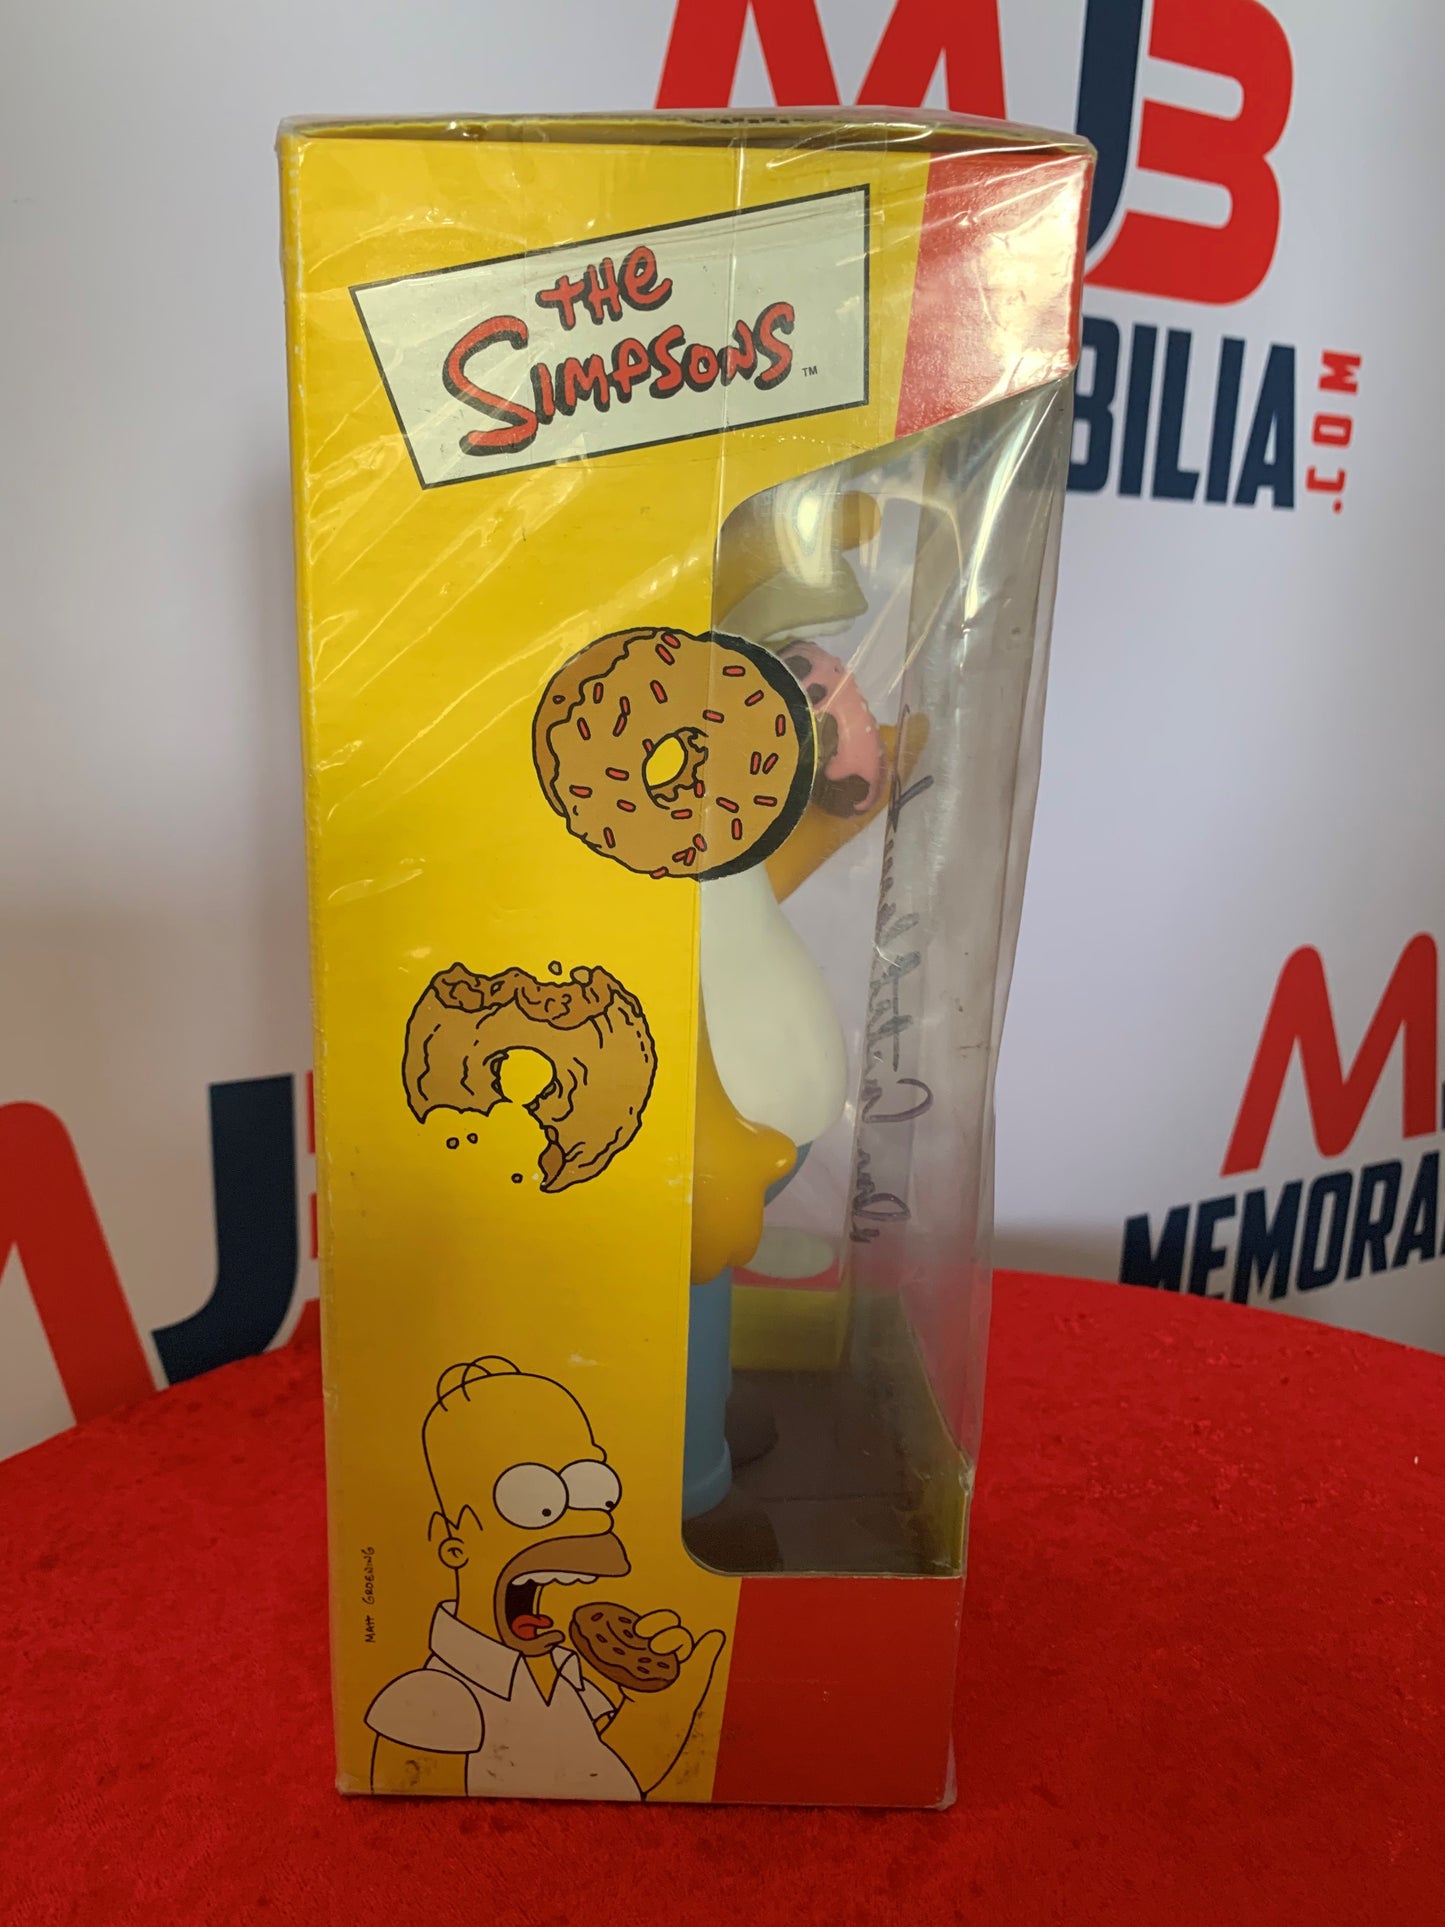 Dan Castellaneta Signed The Simpsons Homer  Bobble Head Figure (PSA COA)